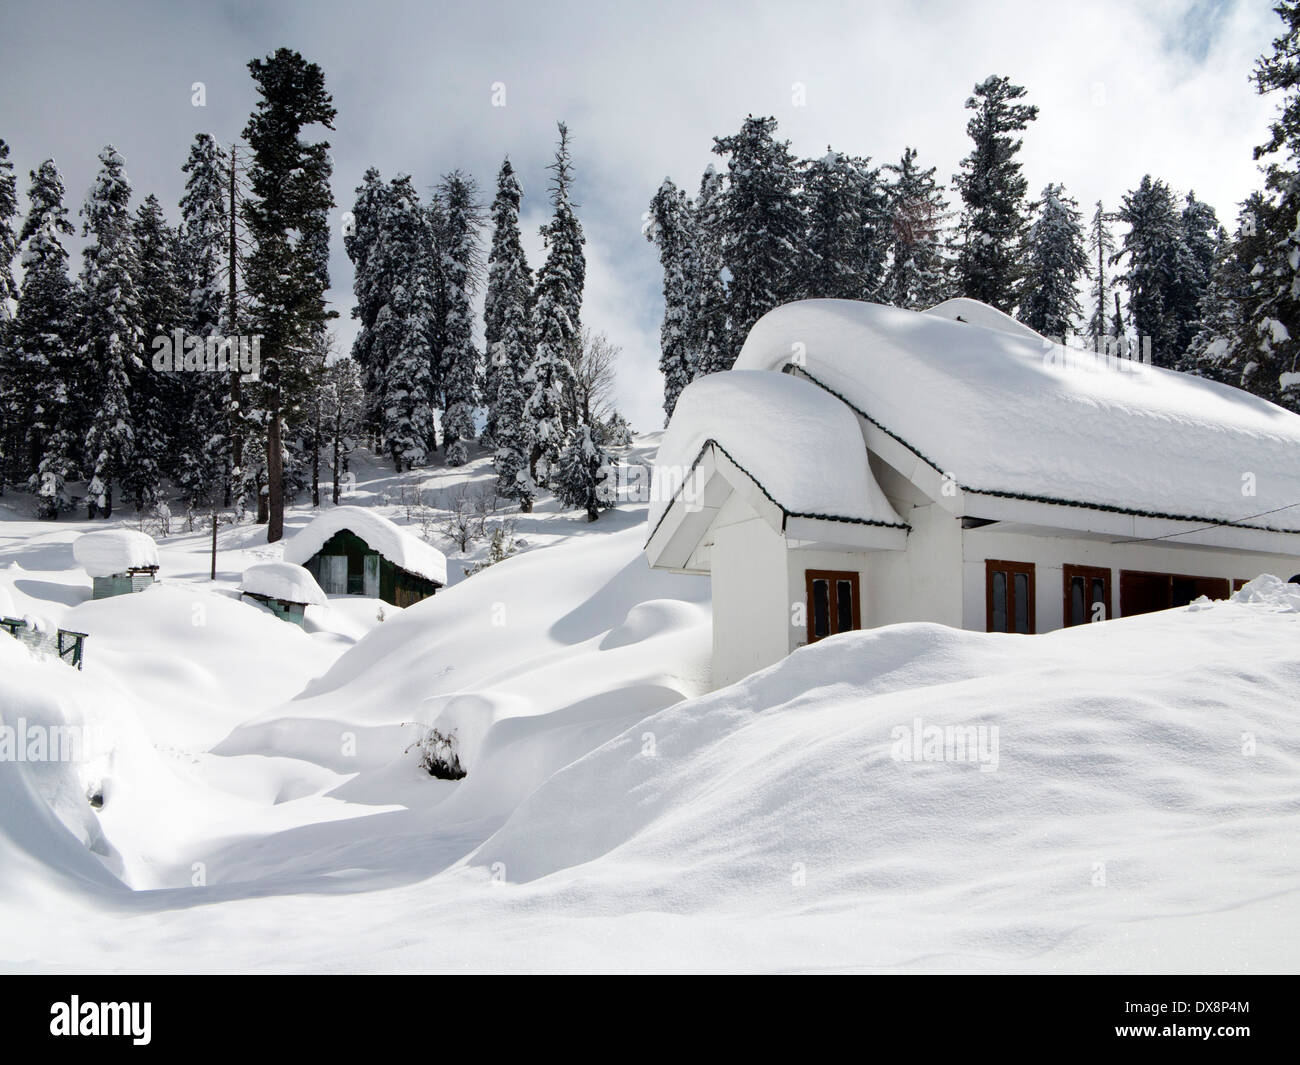 India, Kashmir, Gulmarg, Himalayan Ski Resort, houses almost buried in heavy snowfall Stock Photo